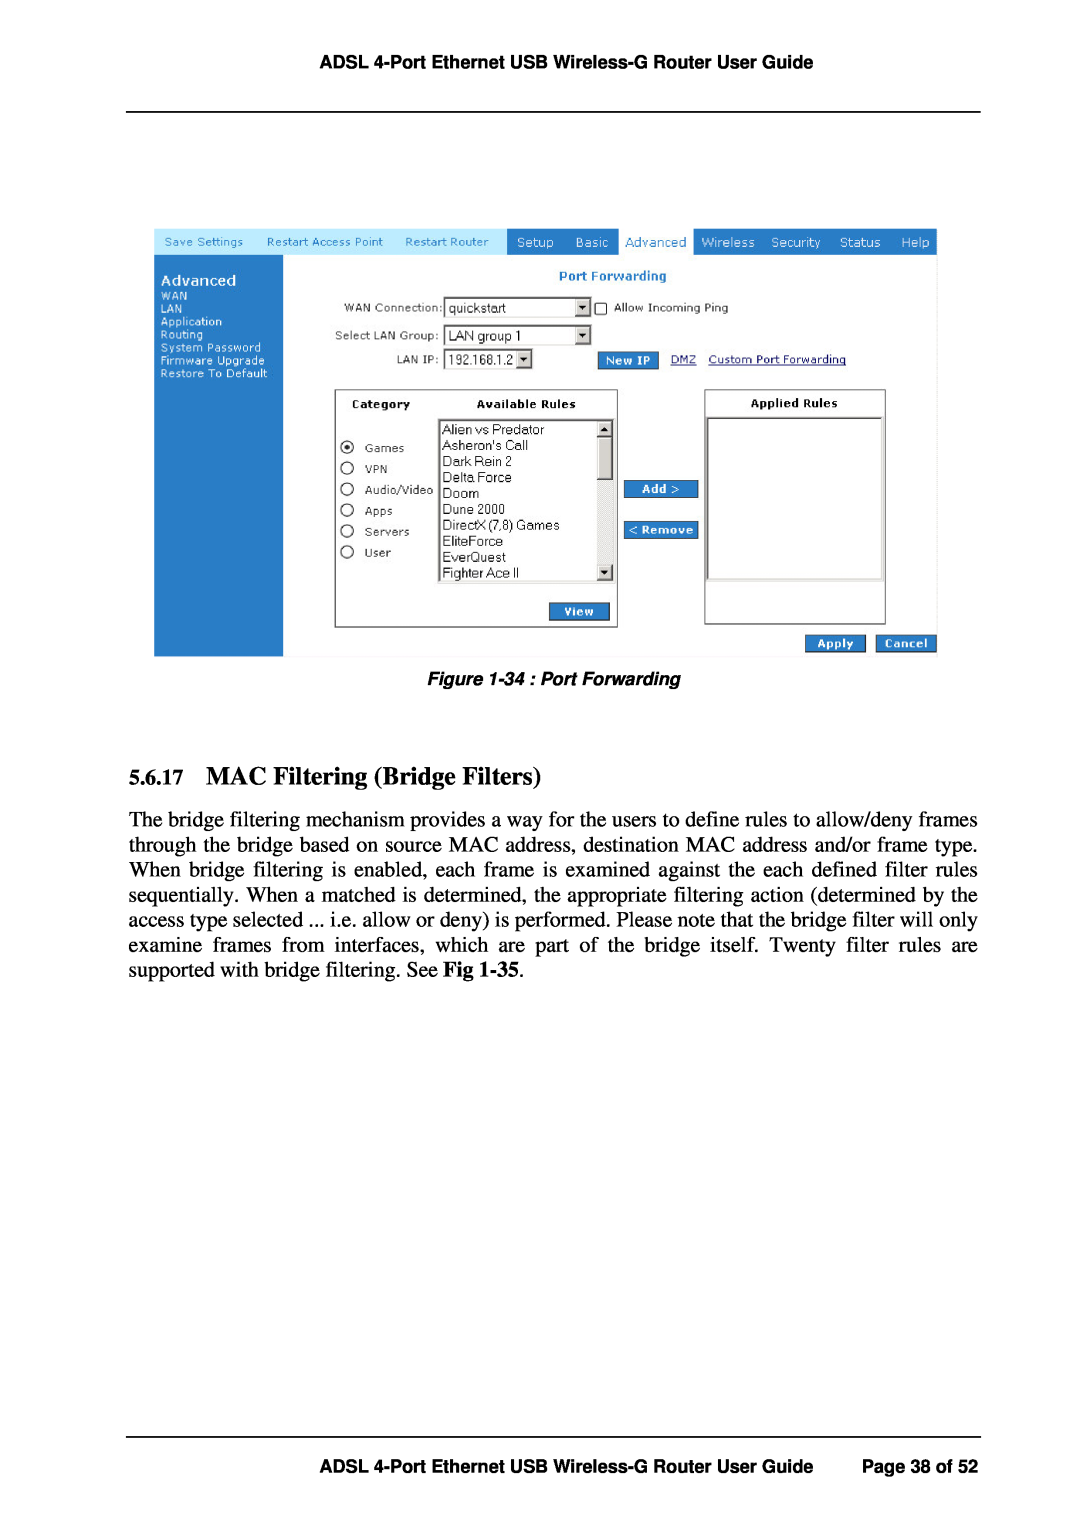 APC ADSL 4-Port manual MAC Filtering Bridge Filters, 34 Port Forwarding 